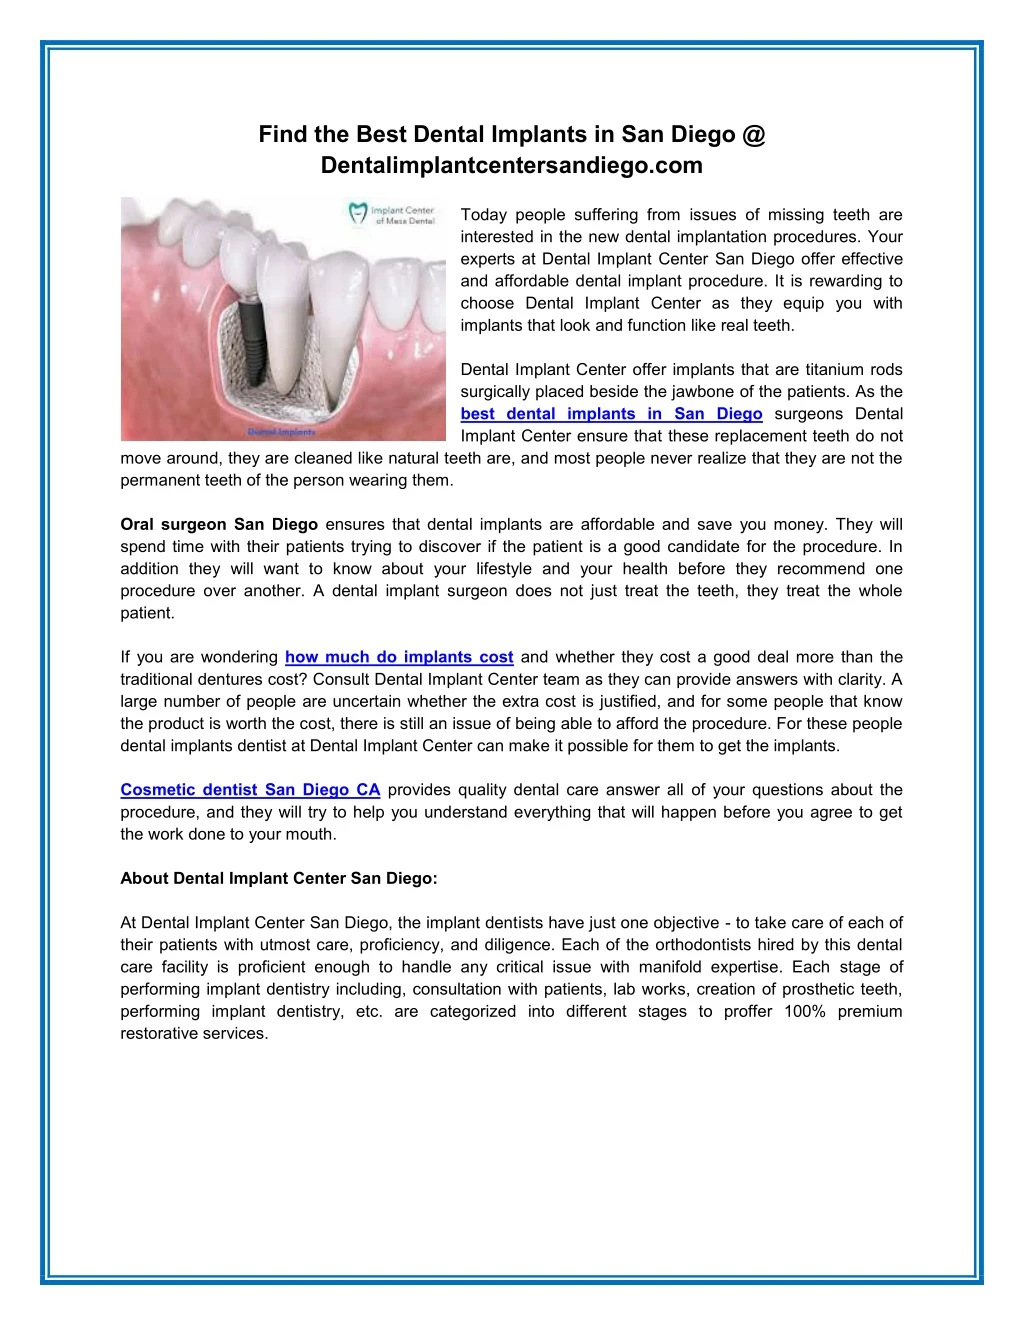 find the best dental implants in san diego